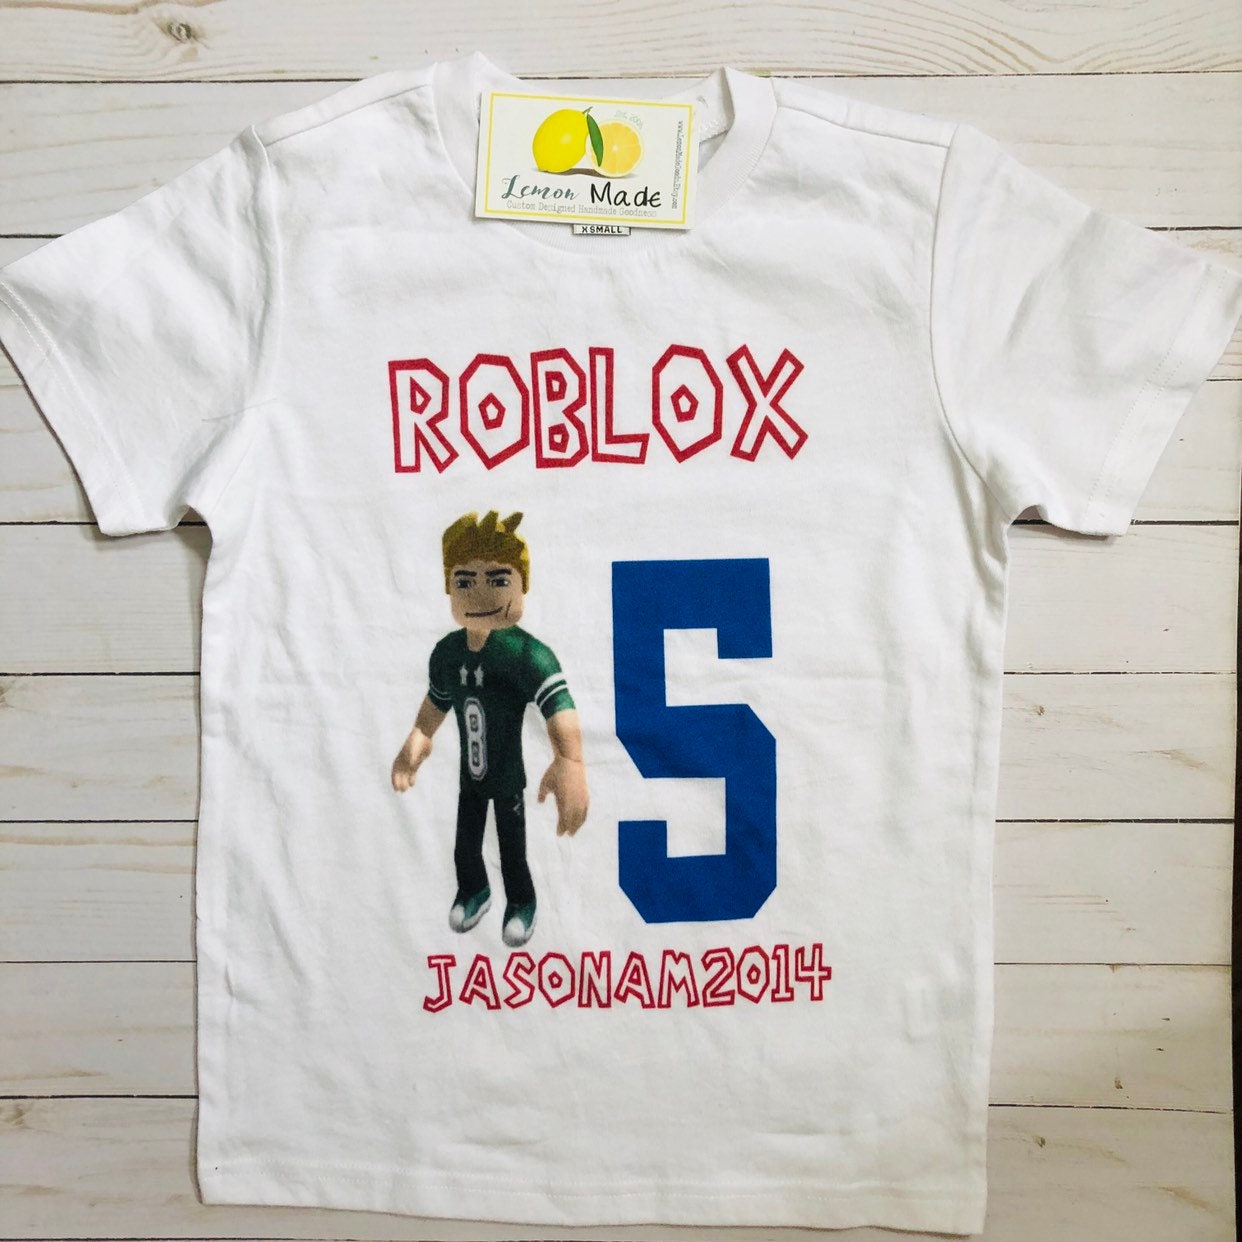 Custom Roblox Shirt Maker Buyudum Cocuk Oldum - fiverr search results for robux